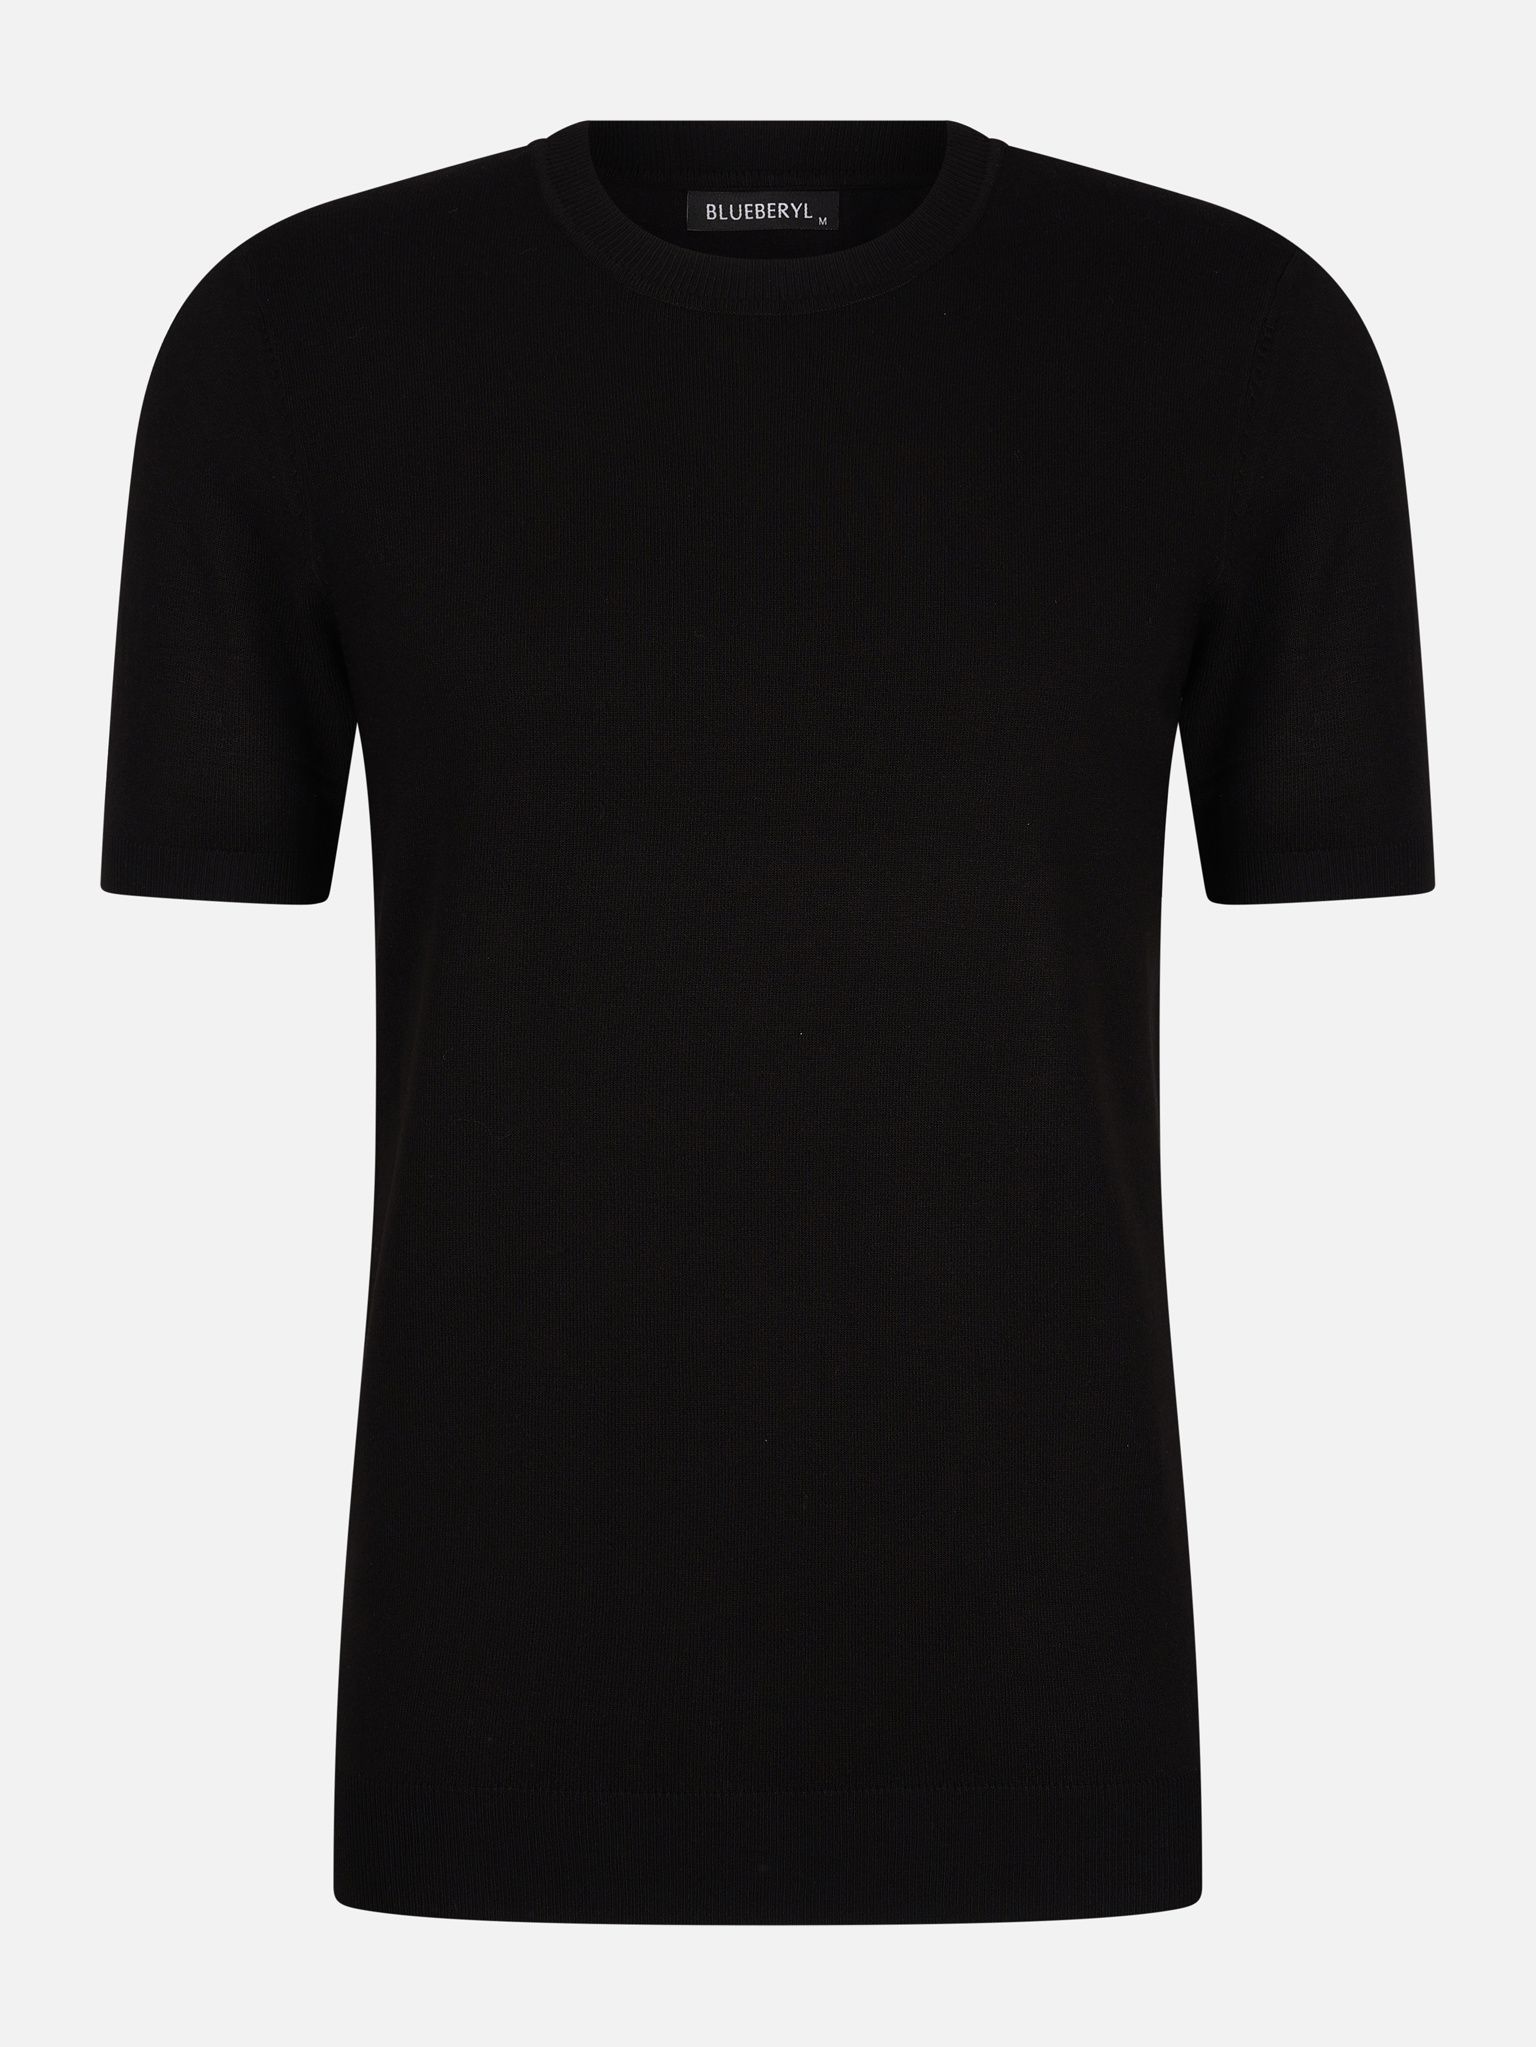 Souvenir Kust vice versa Zwart T-shirt heren kopen voor €29,95 | Valenci - VALENCI